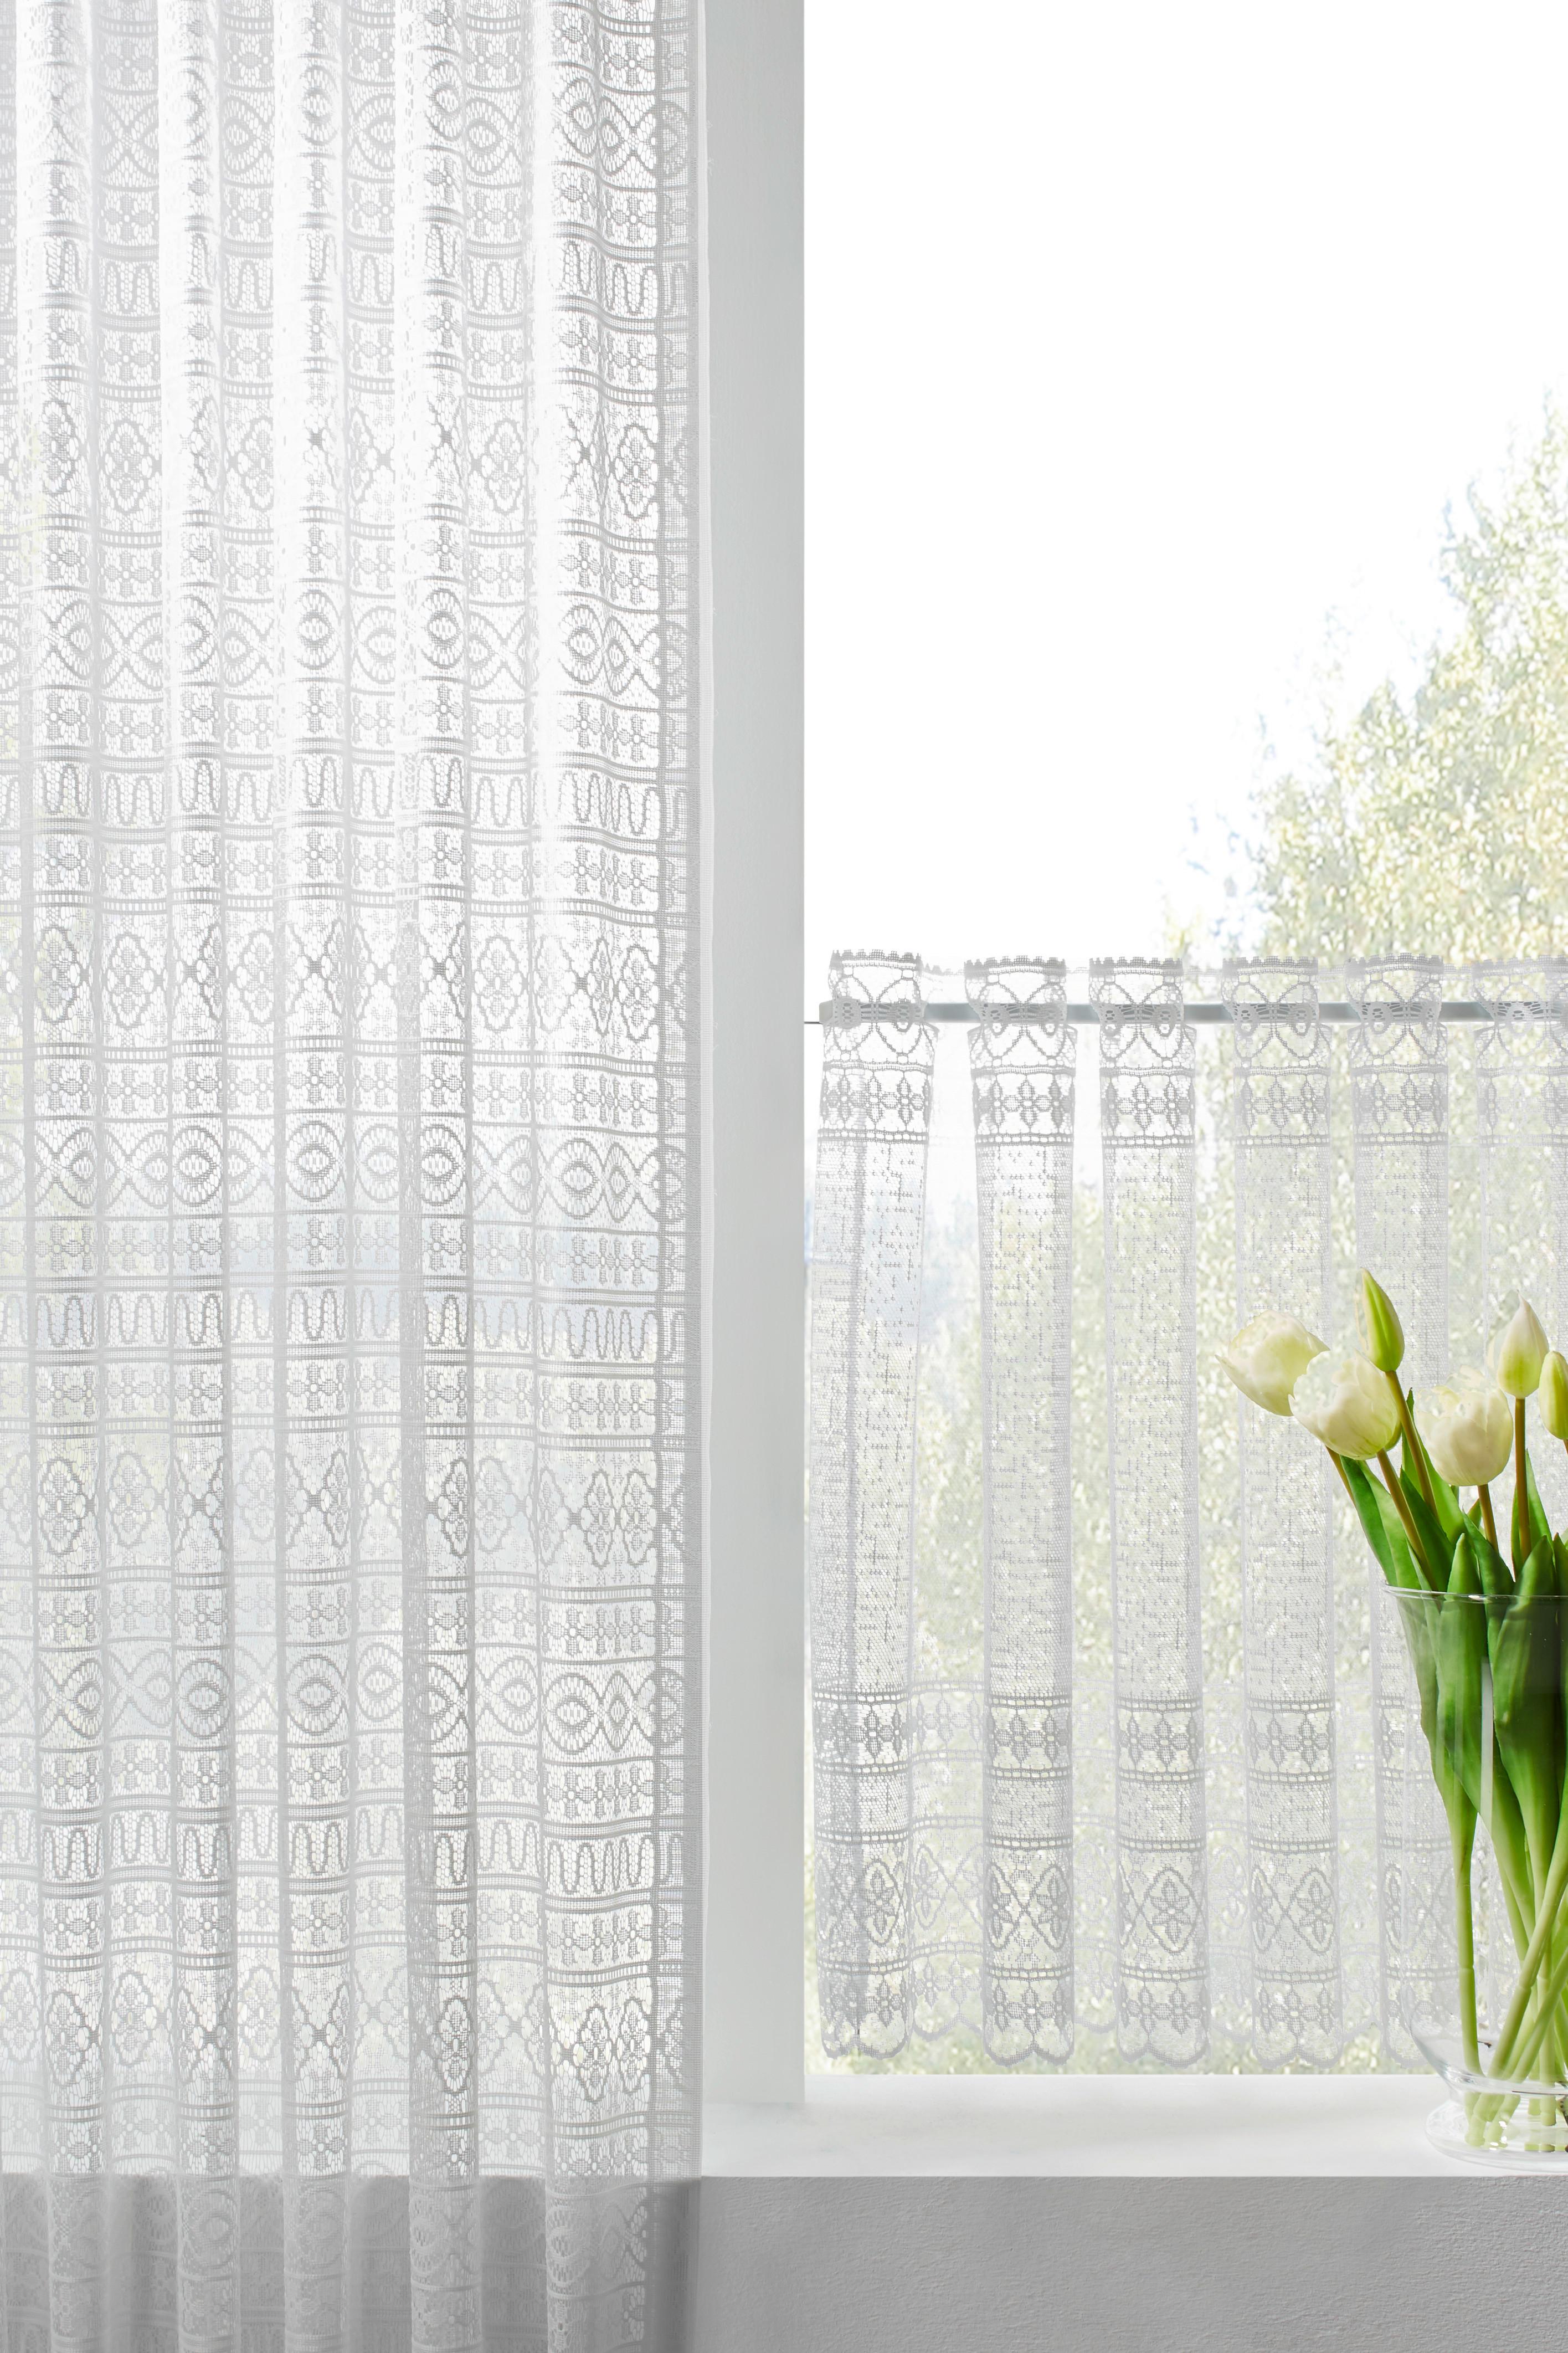 Záclona Krátká Theresa, 145/50cm, Bílá - bílá, textil (145/50cm) - Modern Living